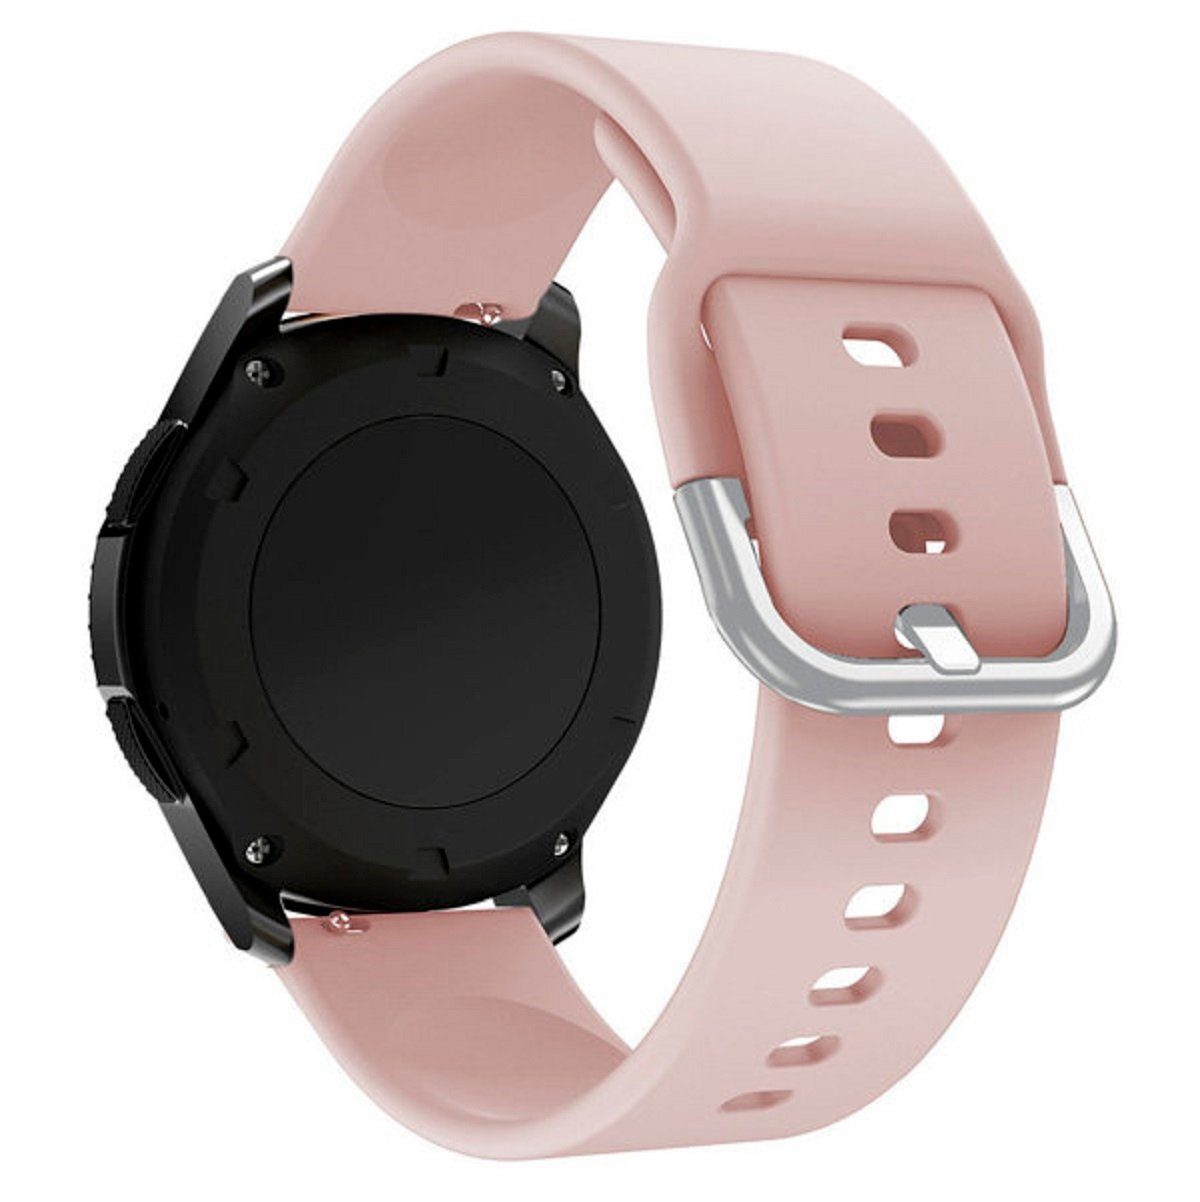 Hurtel Uhrenarmband Silikonarmband Ersatz Smartwatch-Armband universal 22mm Breite Pink